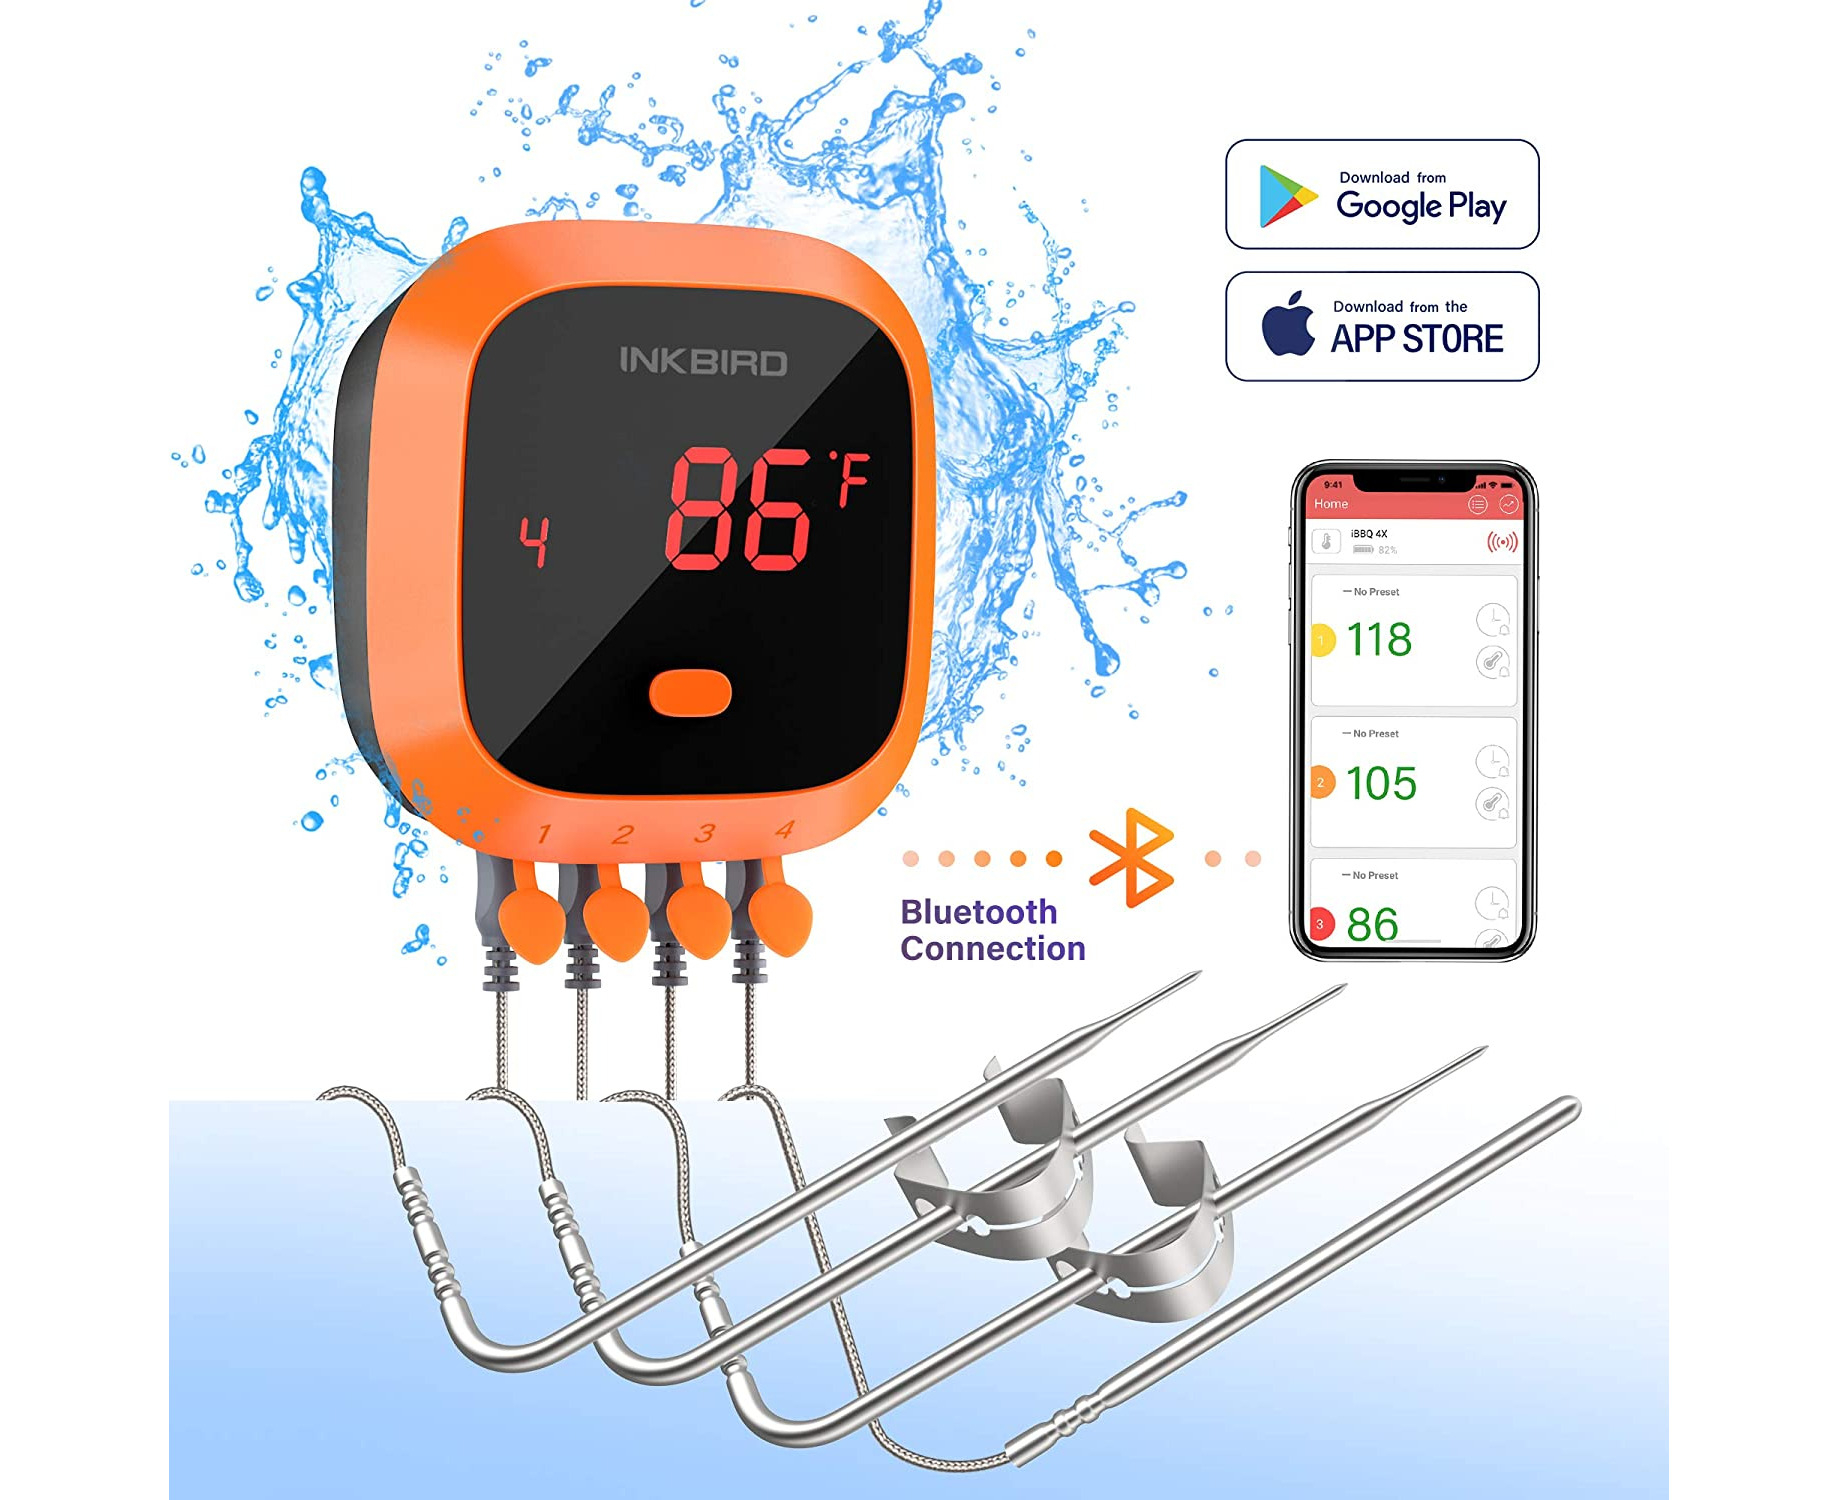 Inkbird BBQ Thermometer in the North America -InkbirdBBQGO